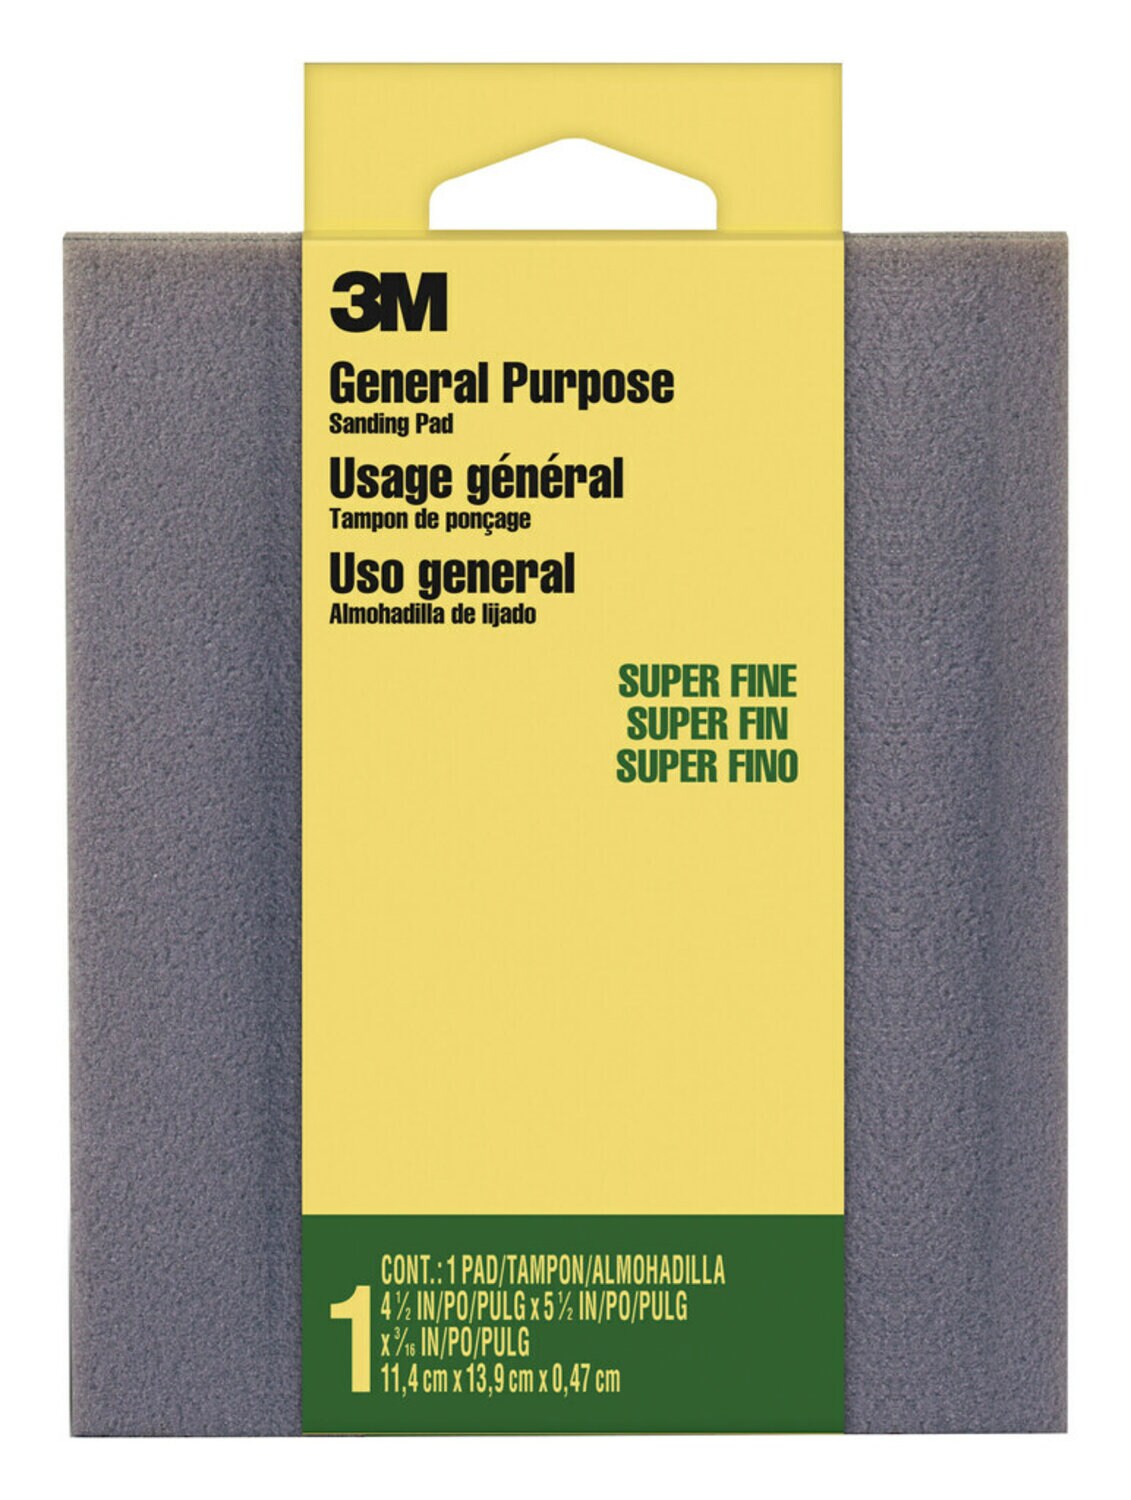 7000126141 - 3M General Purpose Sanding Pad 916DC-NA, Contour Surface, 4 1/2 in x 5 1/2 in x 3/16 in, Super Fine, 1/pk 24 pks/cs